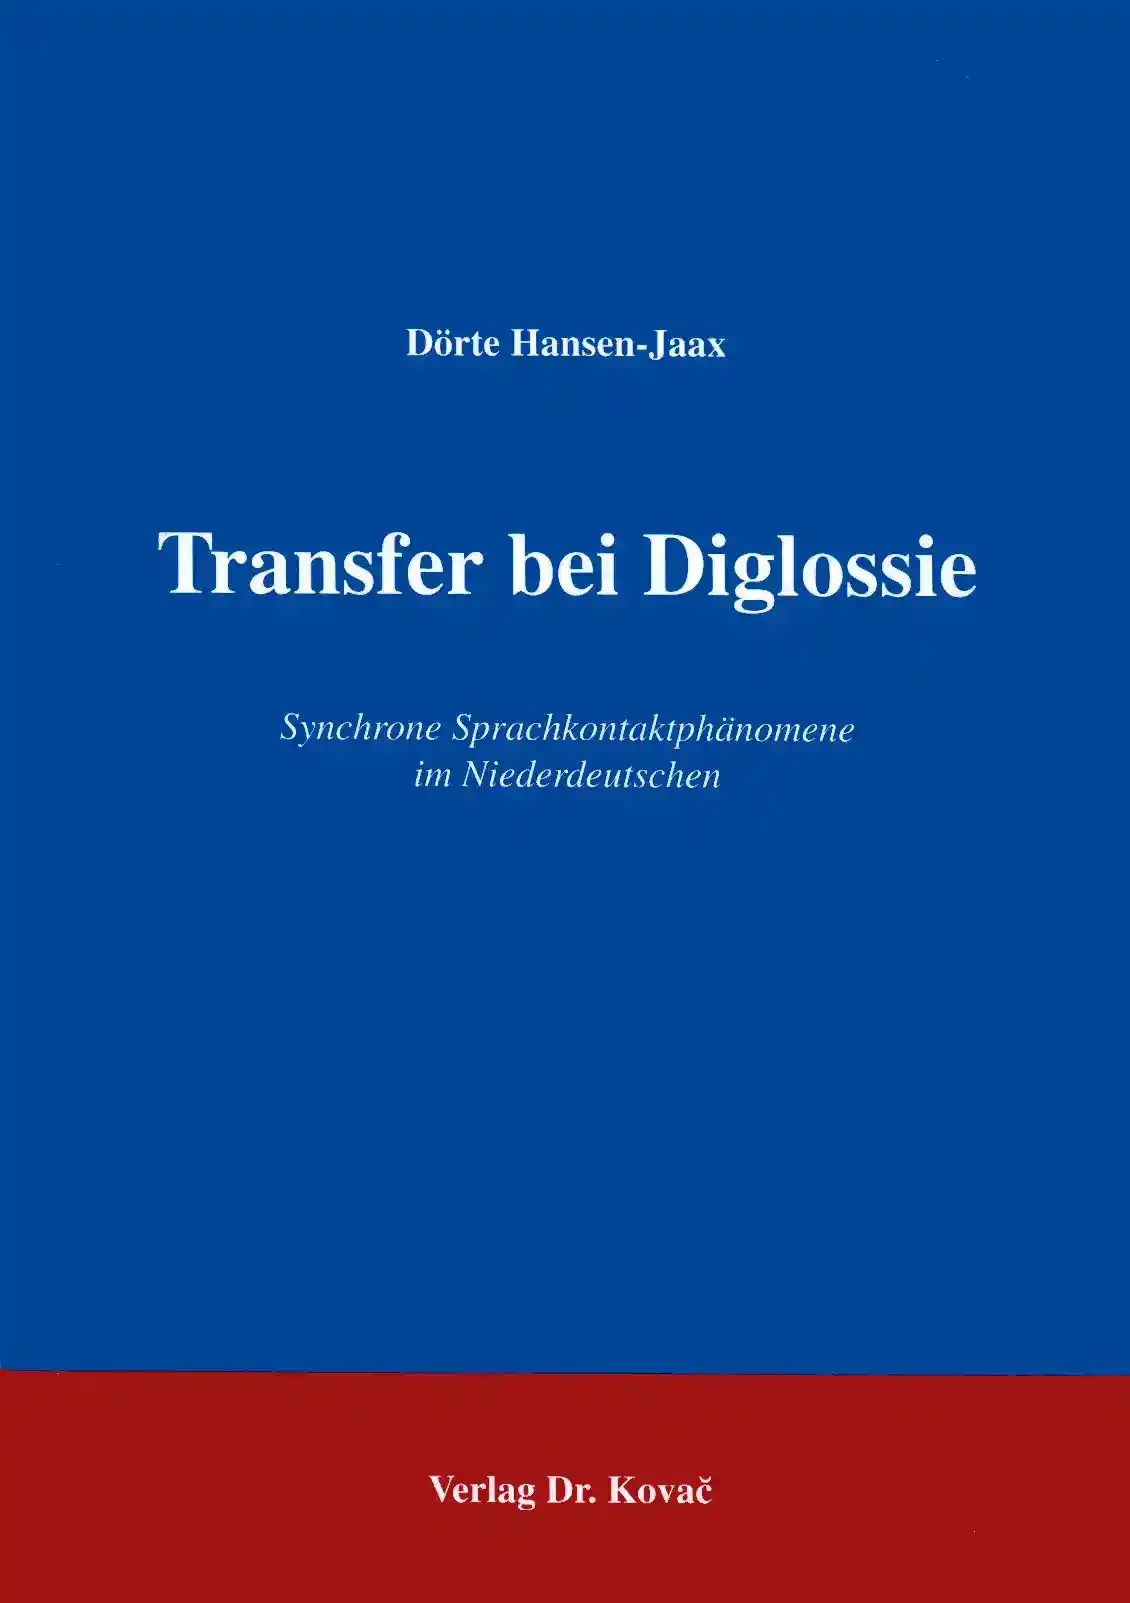 Transfer bei Diglossie (Forschungsarbeit)